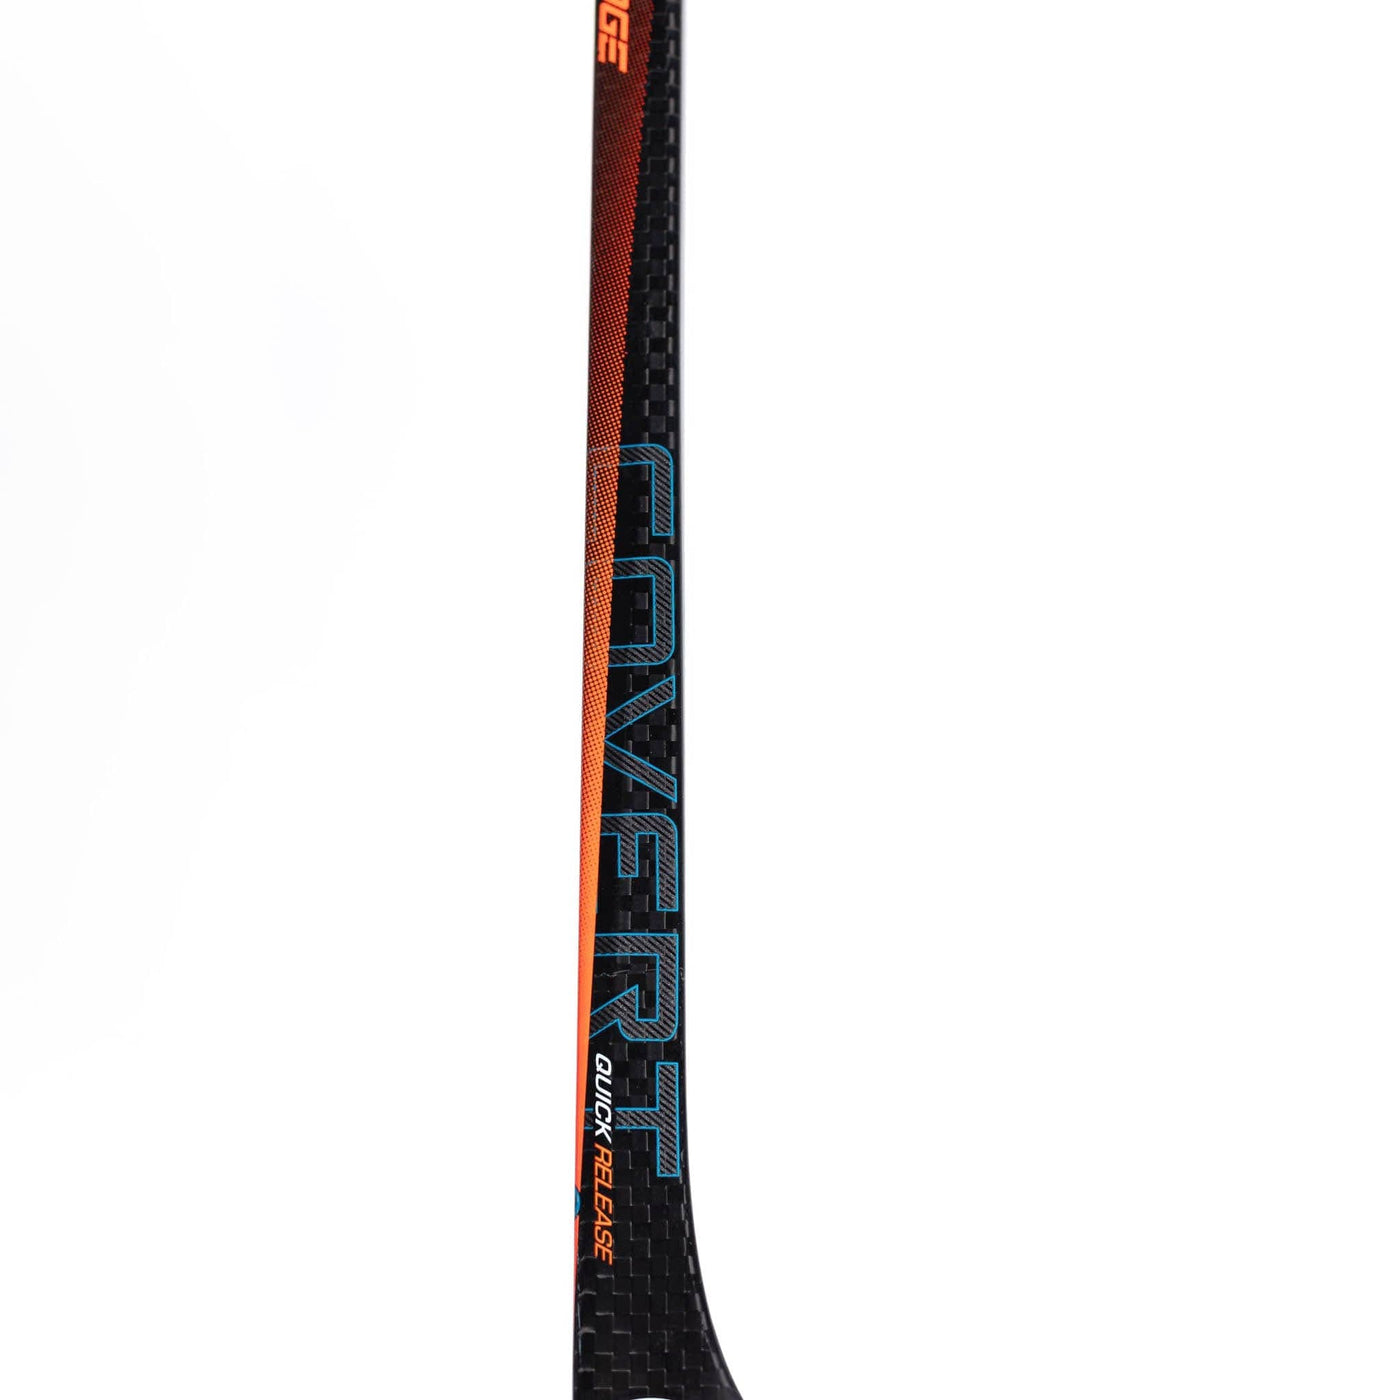 Warrior Covert QR Edge Junior Hockey Stick